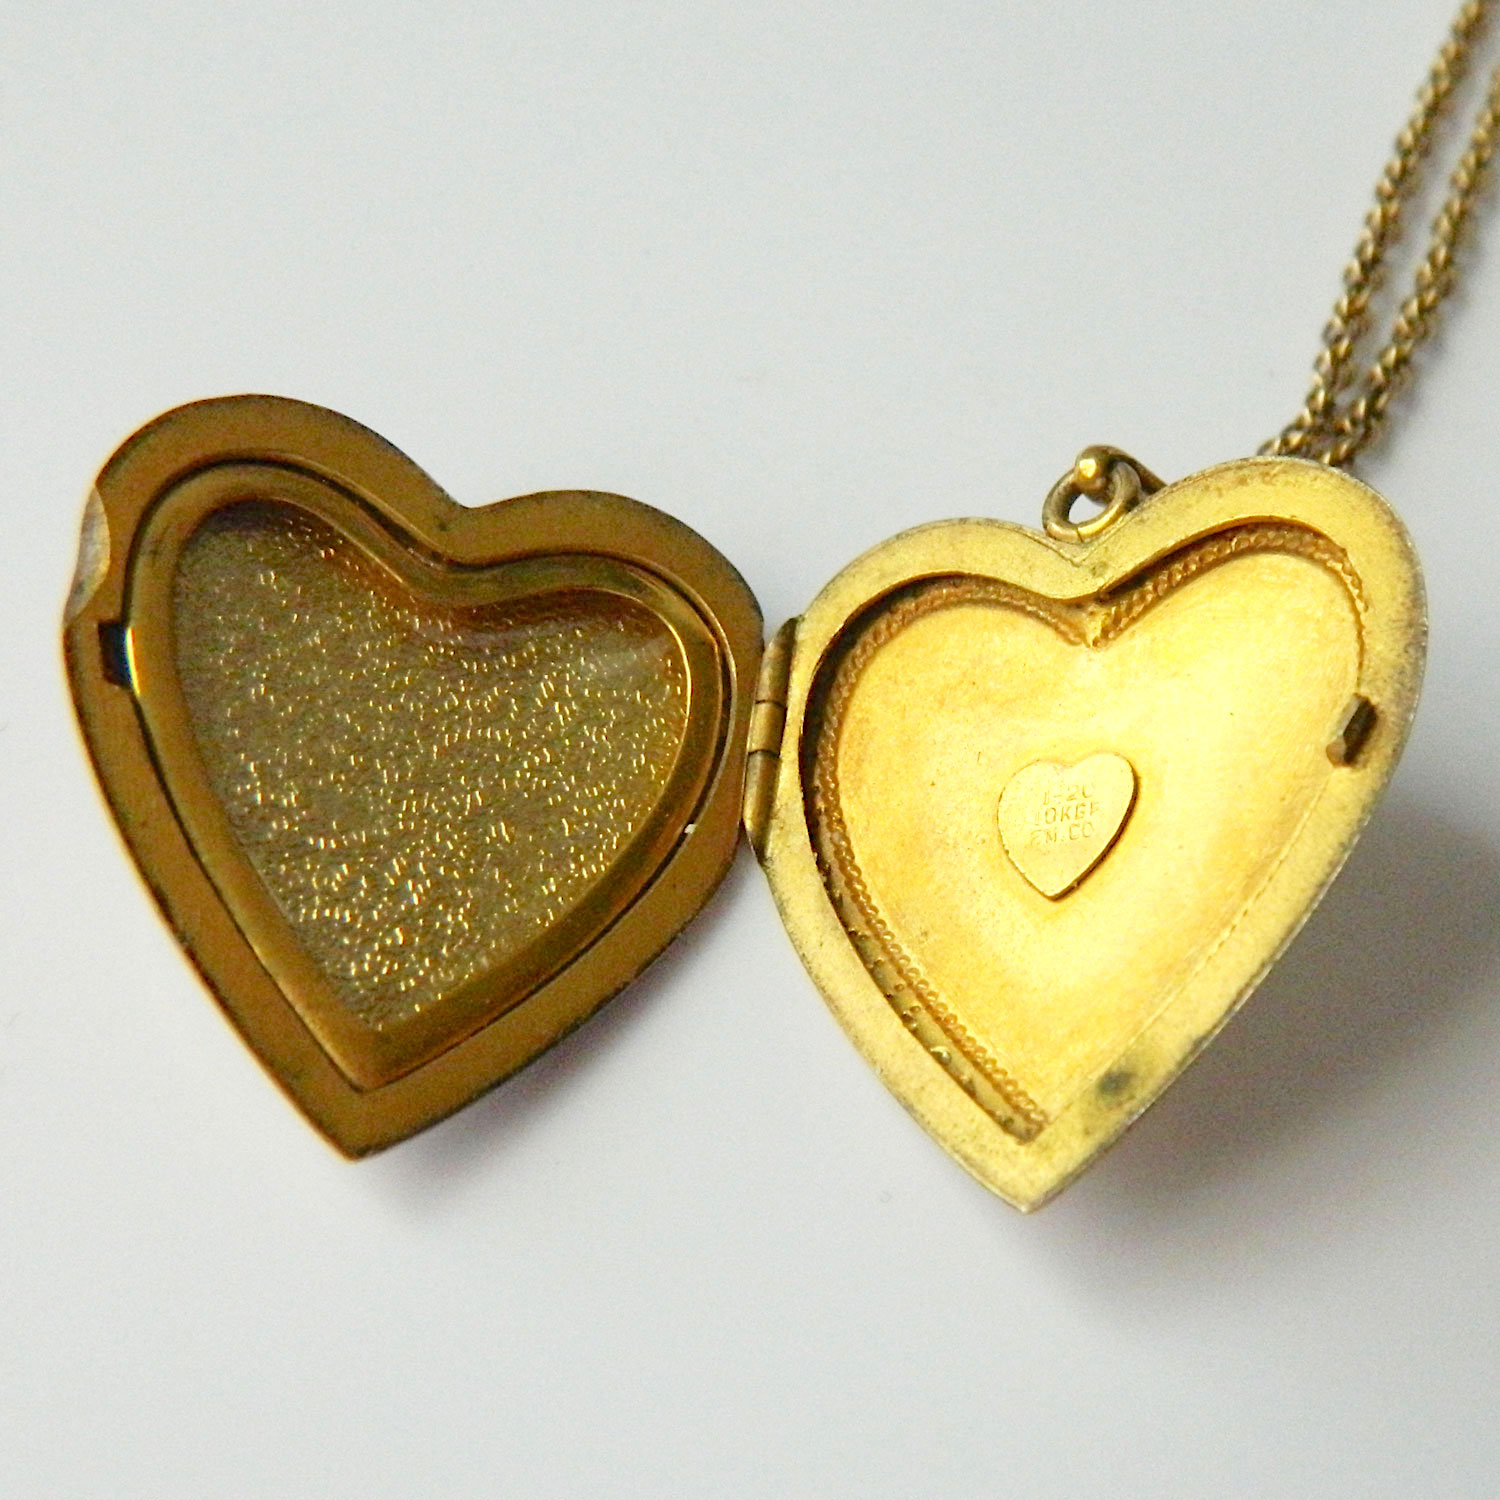 Antique heart locket necklace